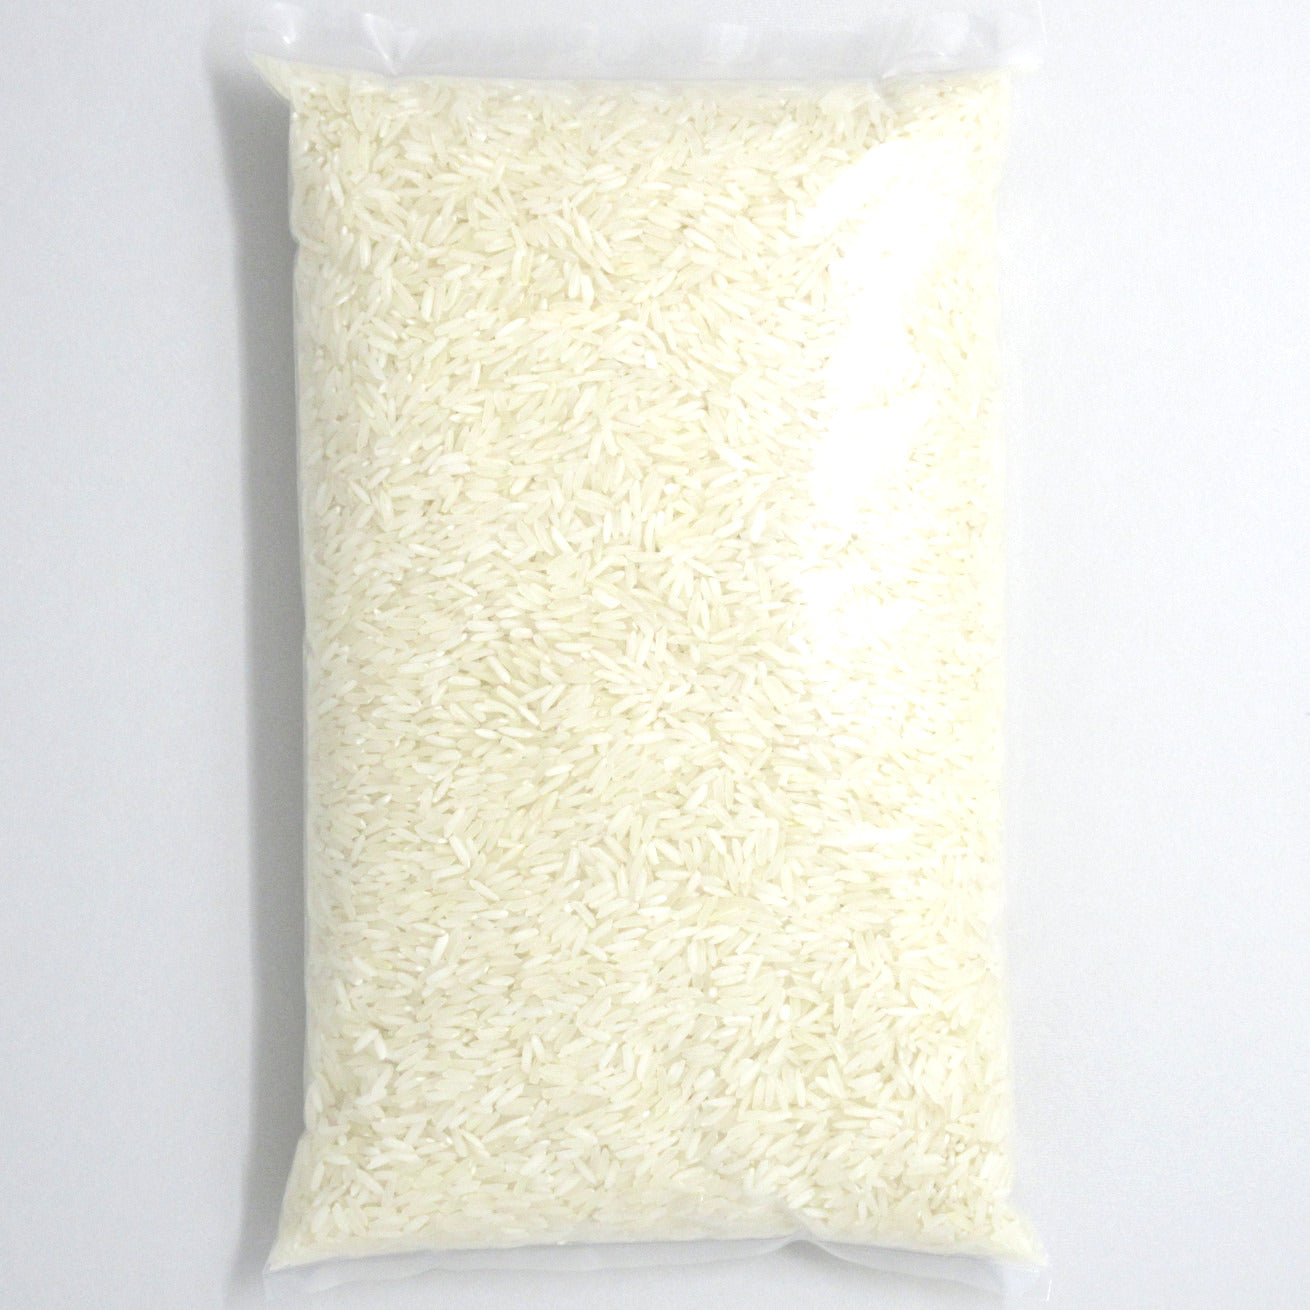 Flour Barrel product image - Jasmine Rice